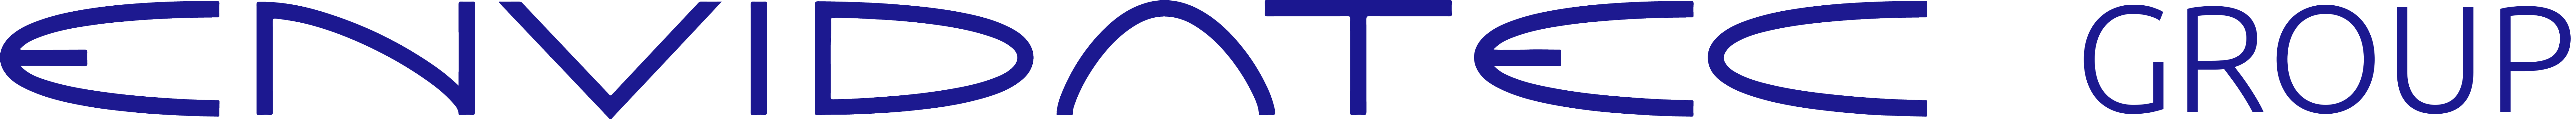 Logo Envidatec Group